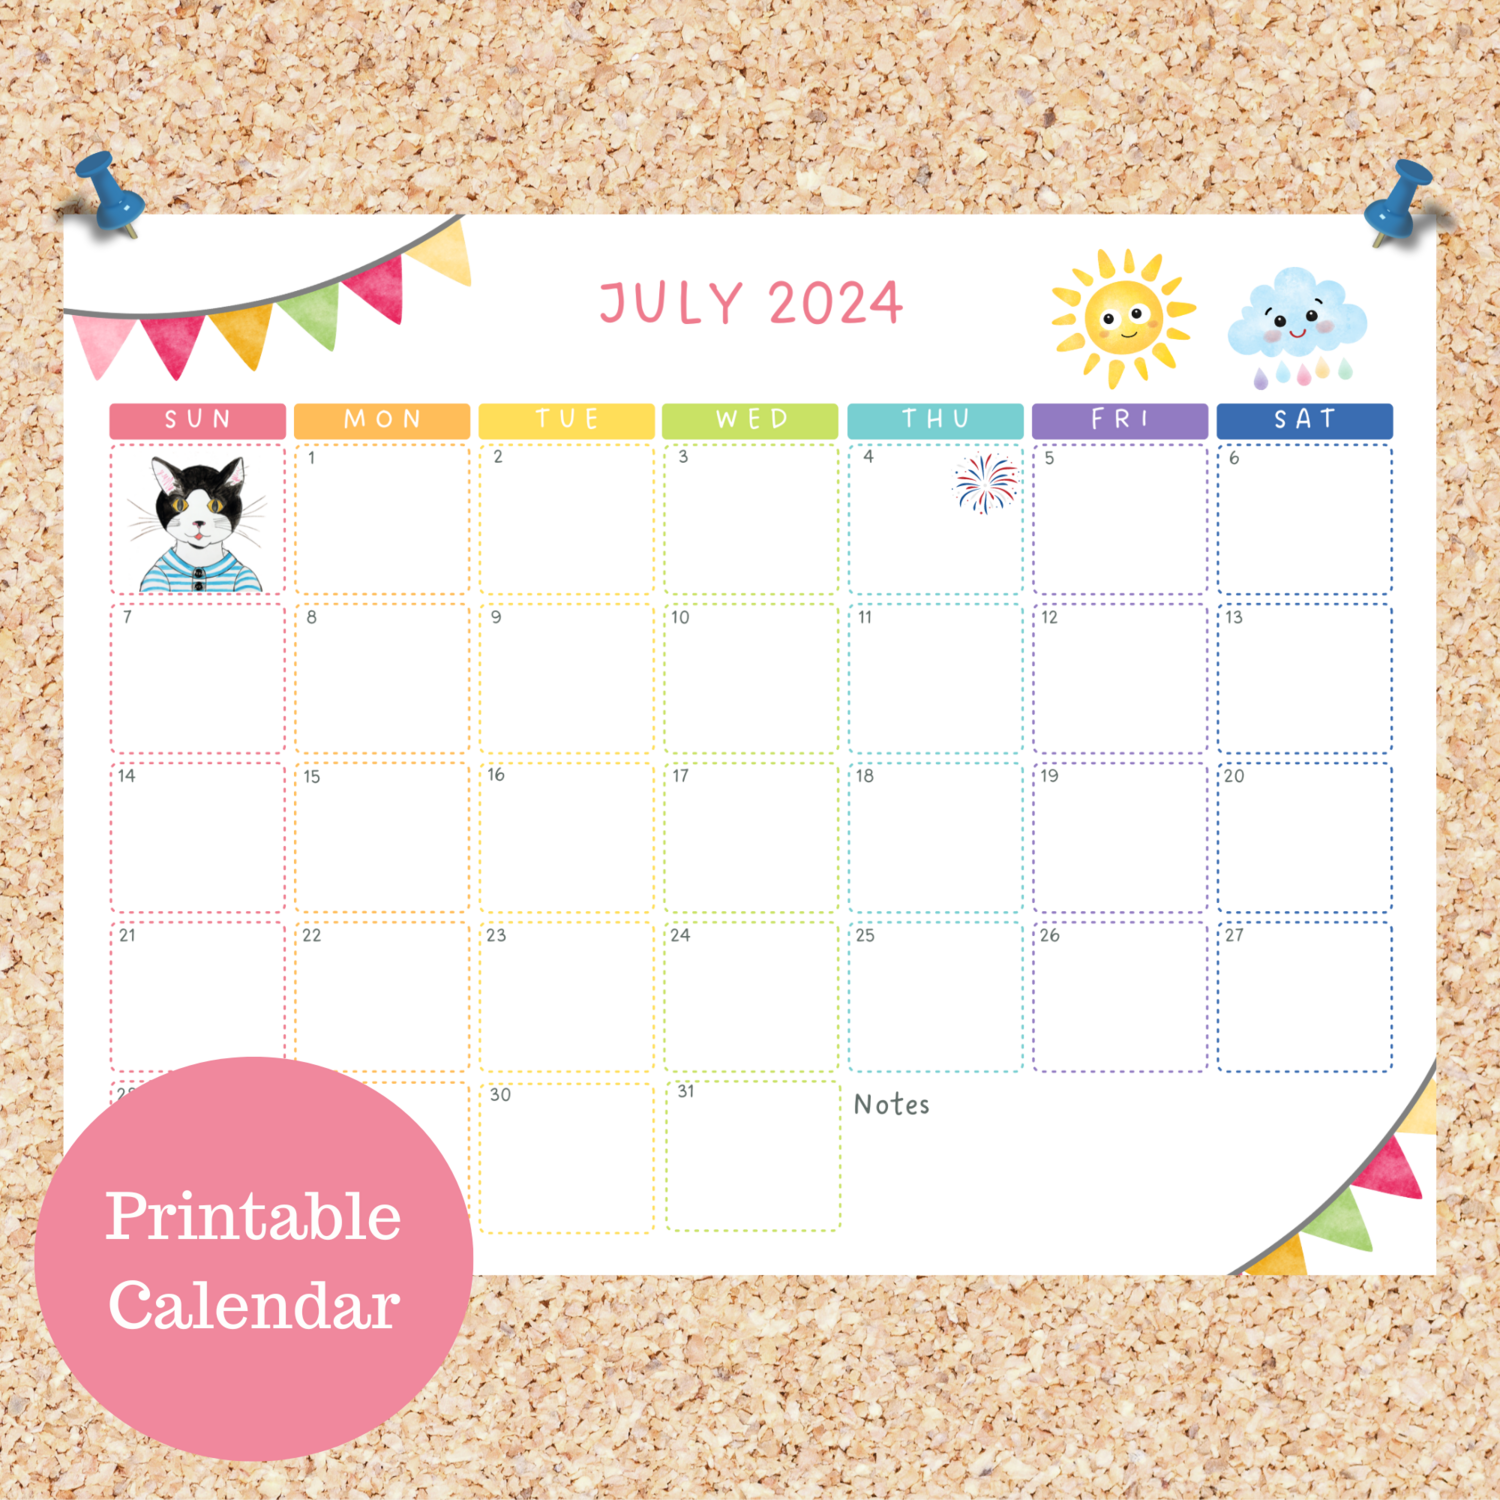 Oli Kids Co July 2024 Printable Calendar, Downloadable Calendar, Cat Calendar, Instant Download, Print at Home